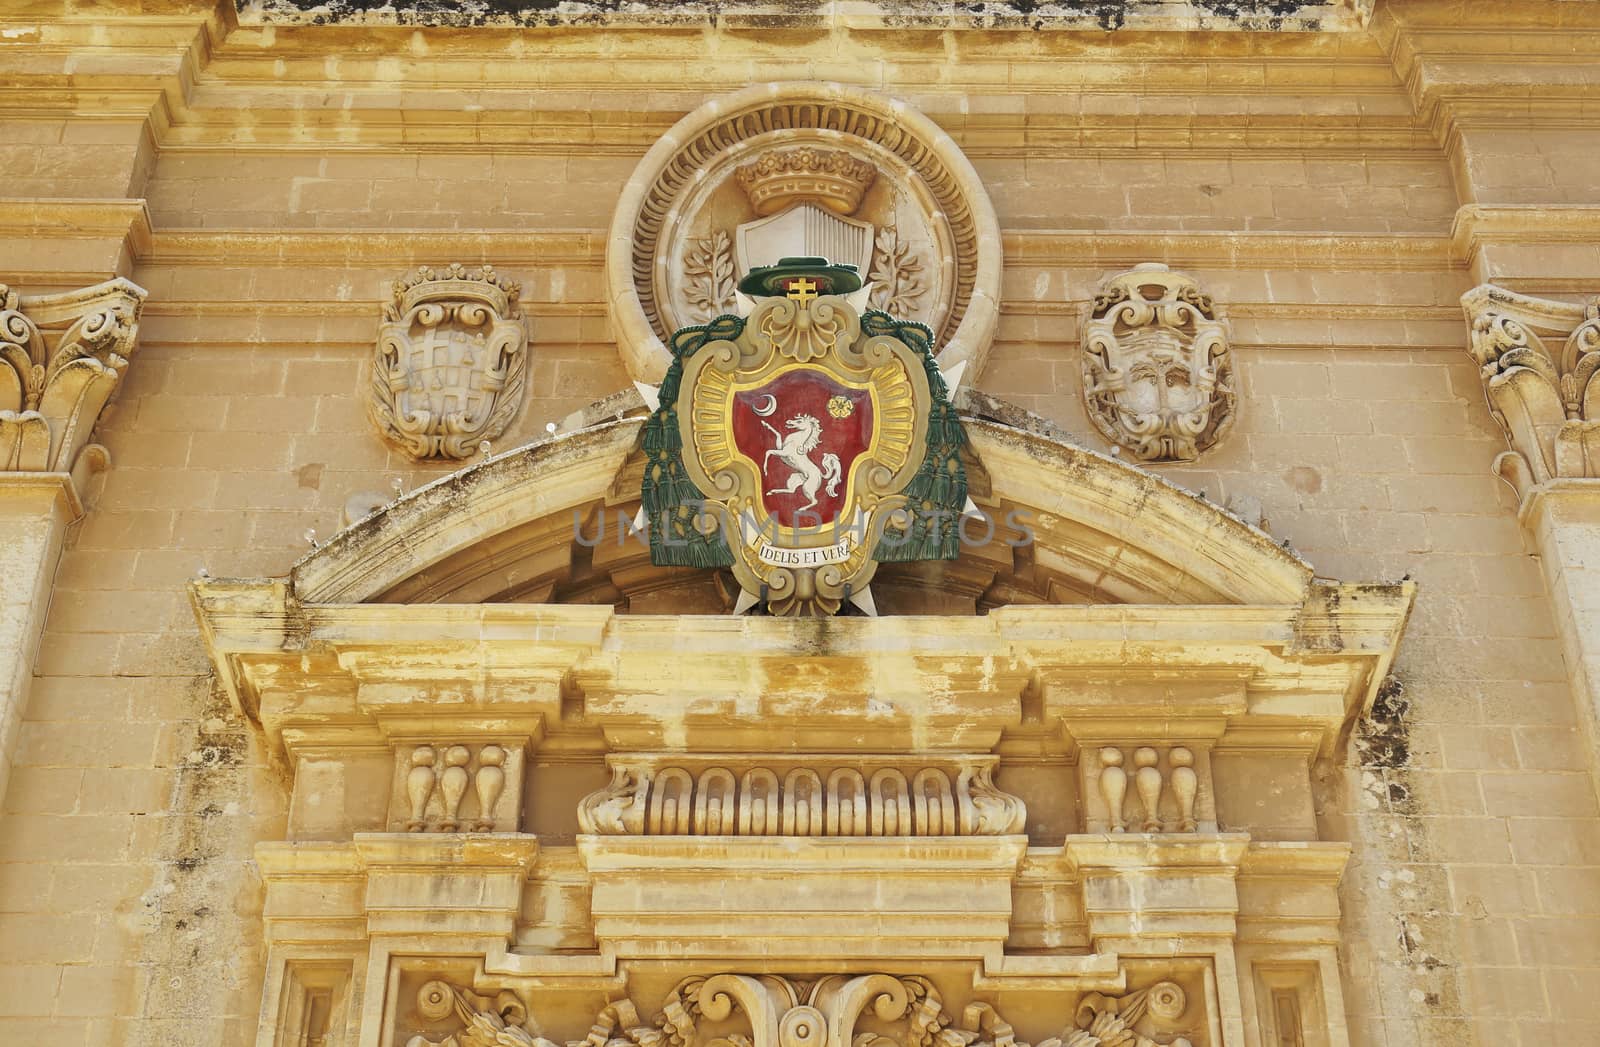 Details over the front door of the Metropolitan Cathedral of Saint Paul in Mdina, Malta